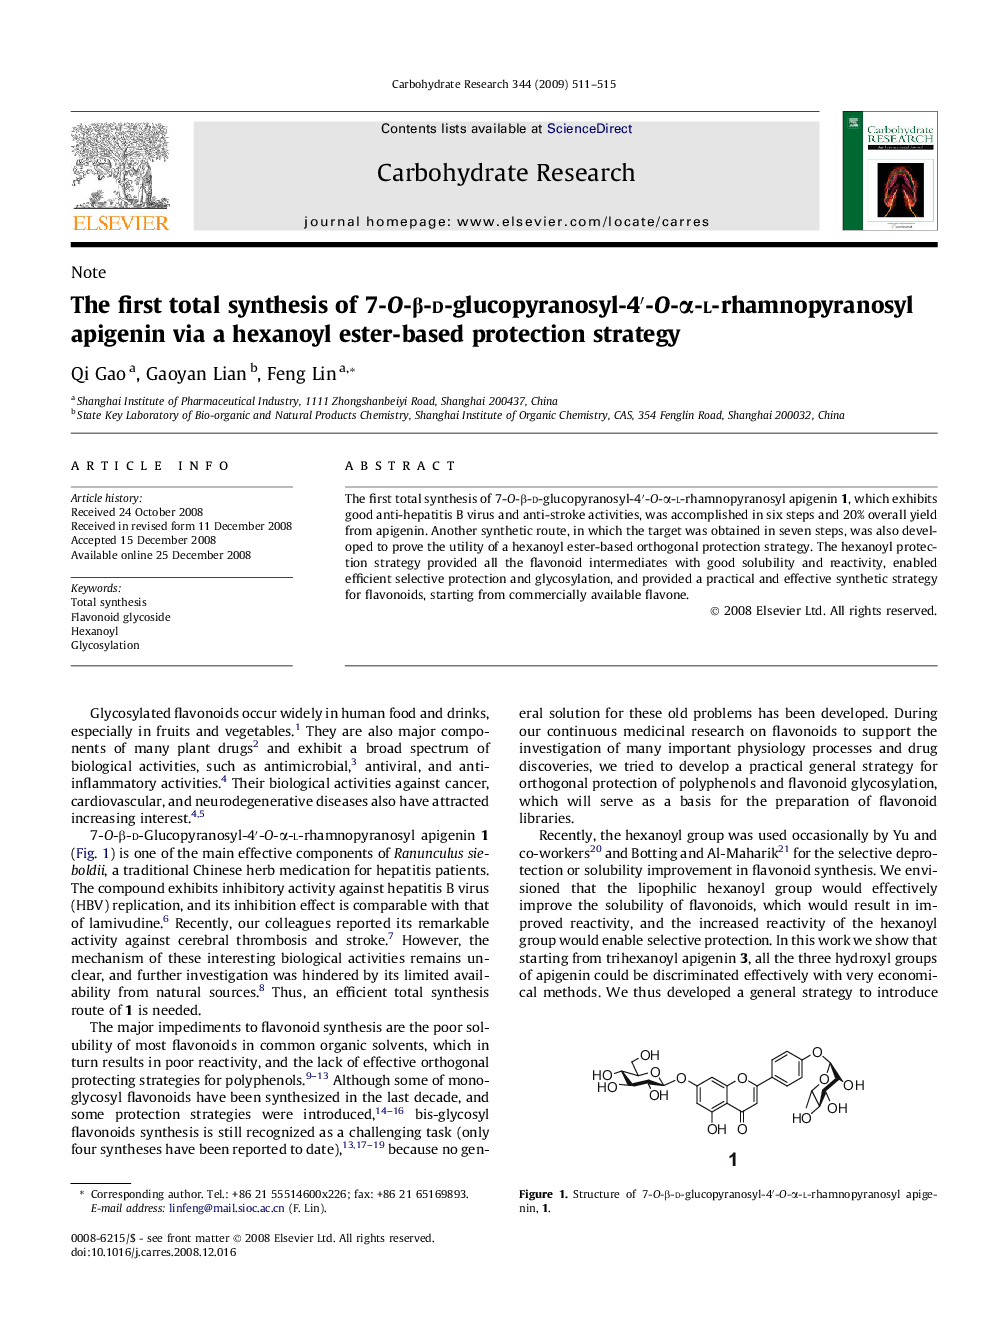 The first total synthesis of 7-O-β-d-glucopyranosyl-4′-O-α-l-rhamnopyranosyl apigenin via a hexanoyl ester-based protection strategy